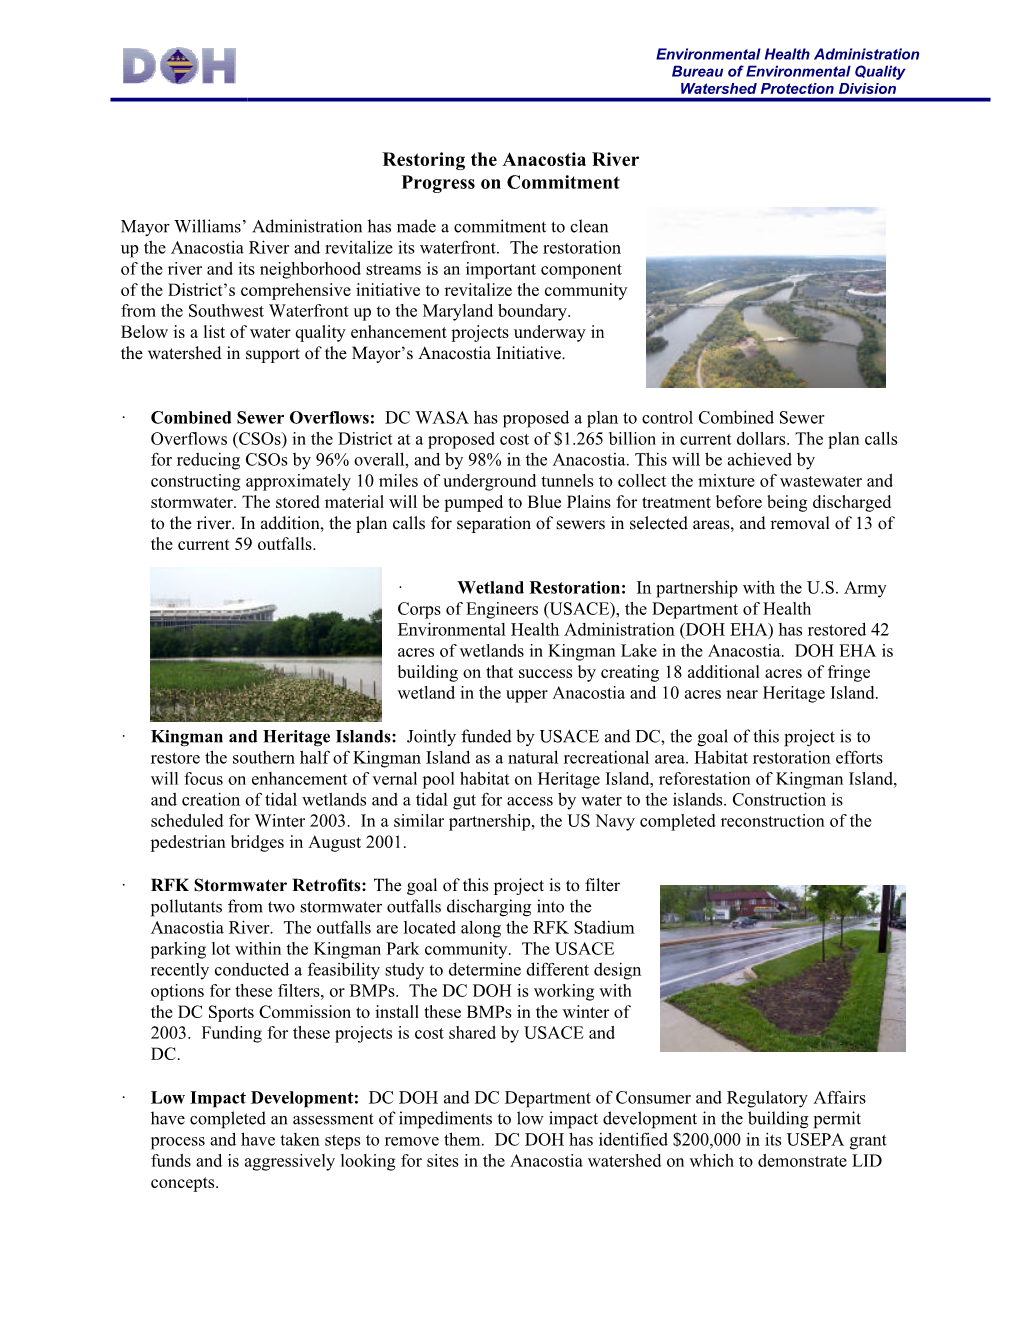 Restoring the Anacostia River Progress on Commitment